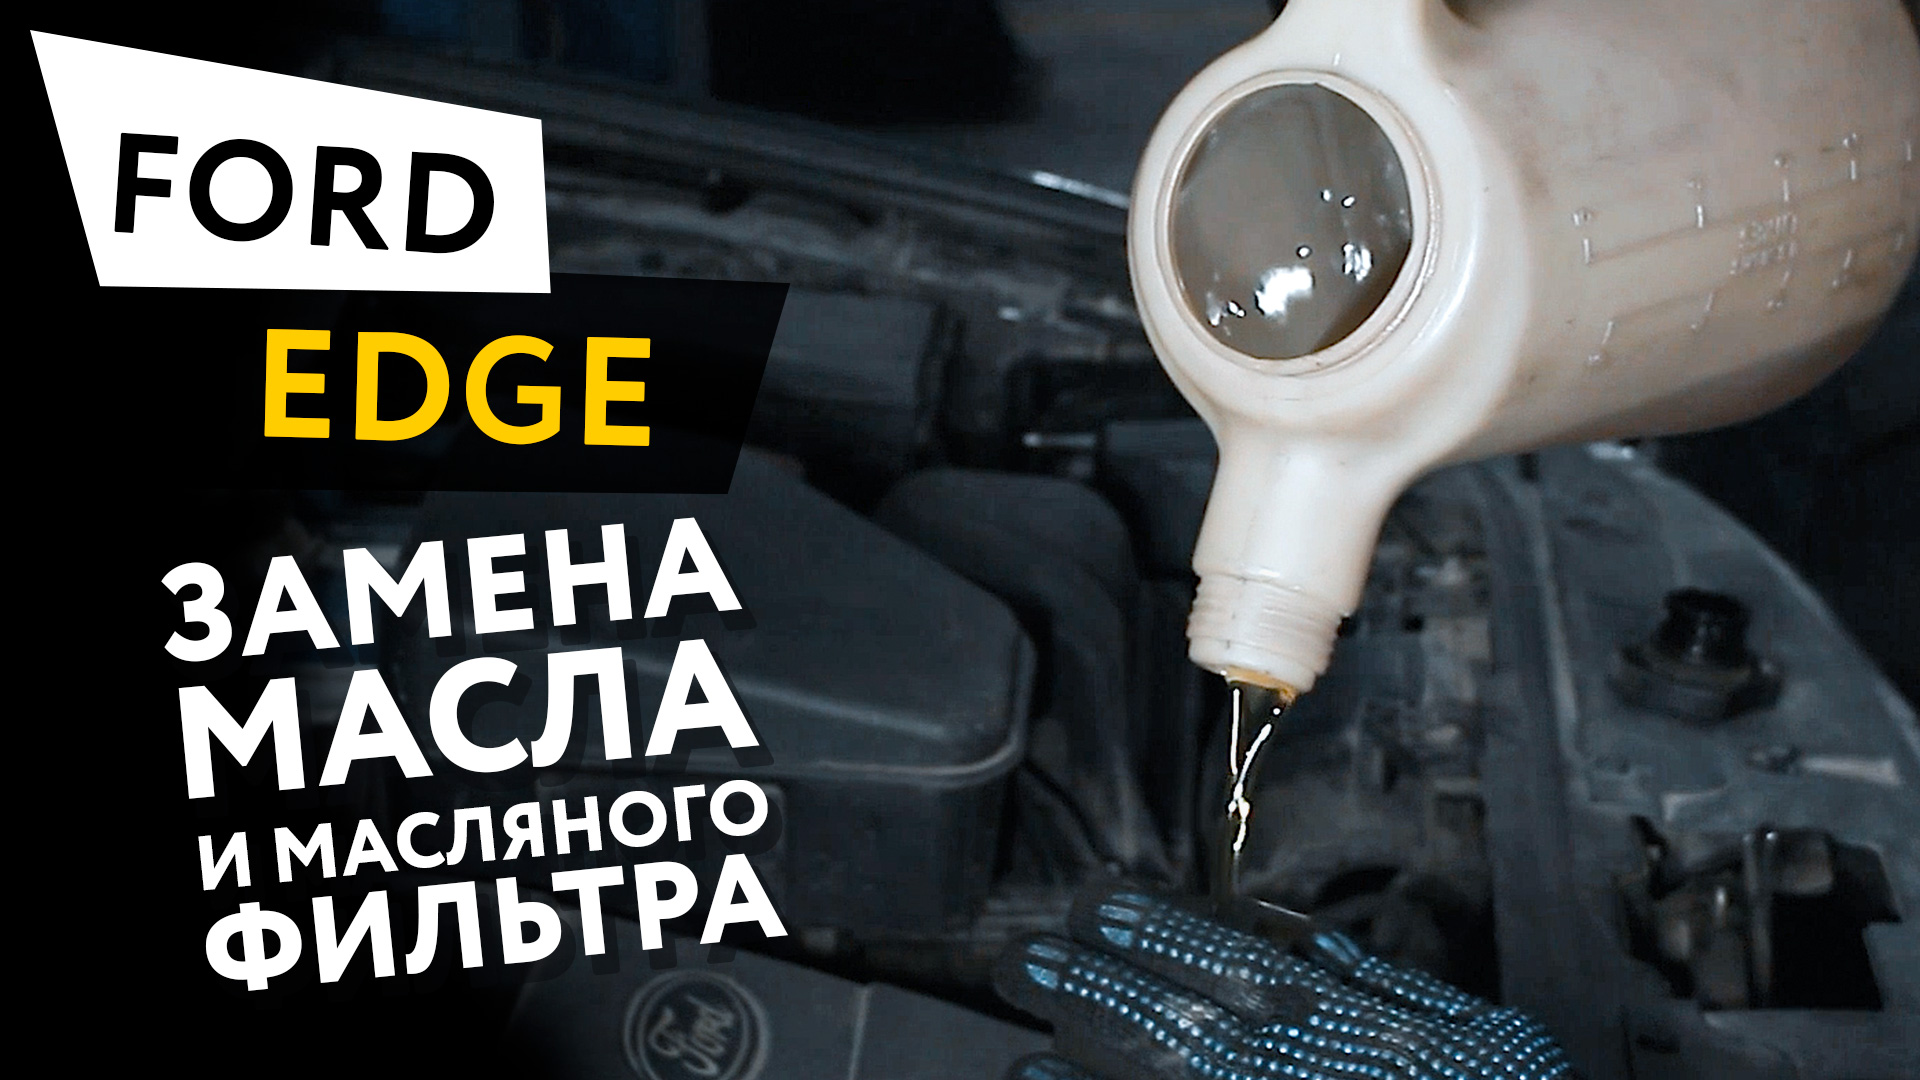 Замена масла и масляного фильтра в двигателе автомобиля Ford Edge 3,5